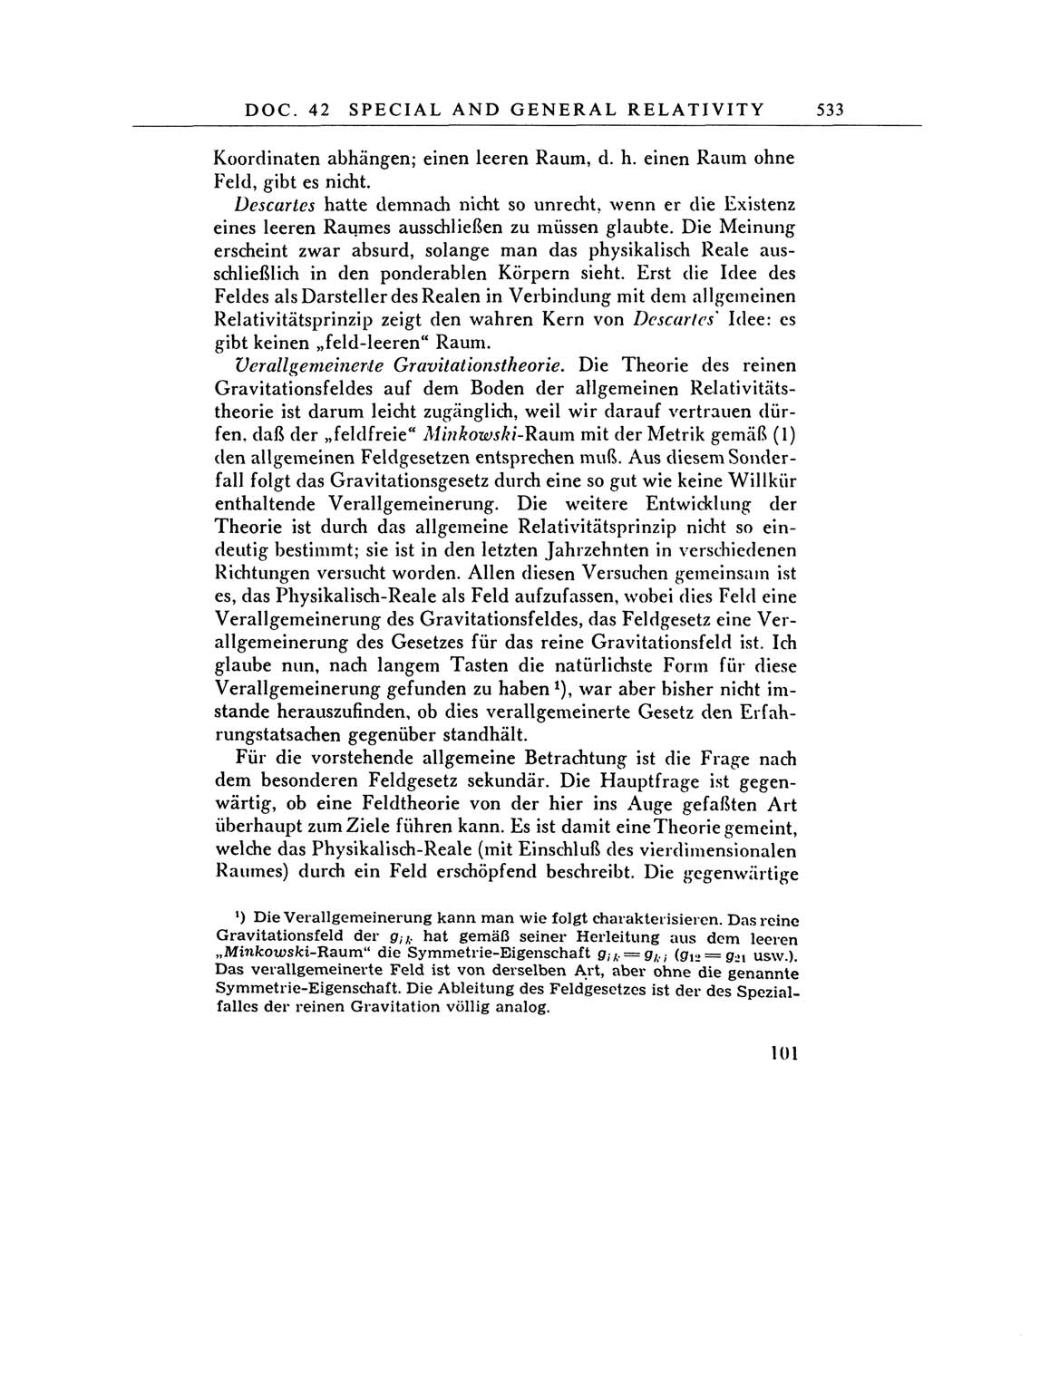 Volume 6: The Berlin Years: Writings, 1914-1917 page 533